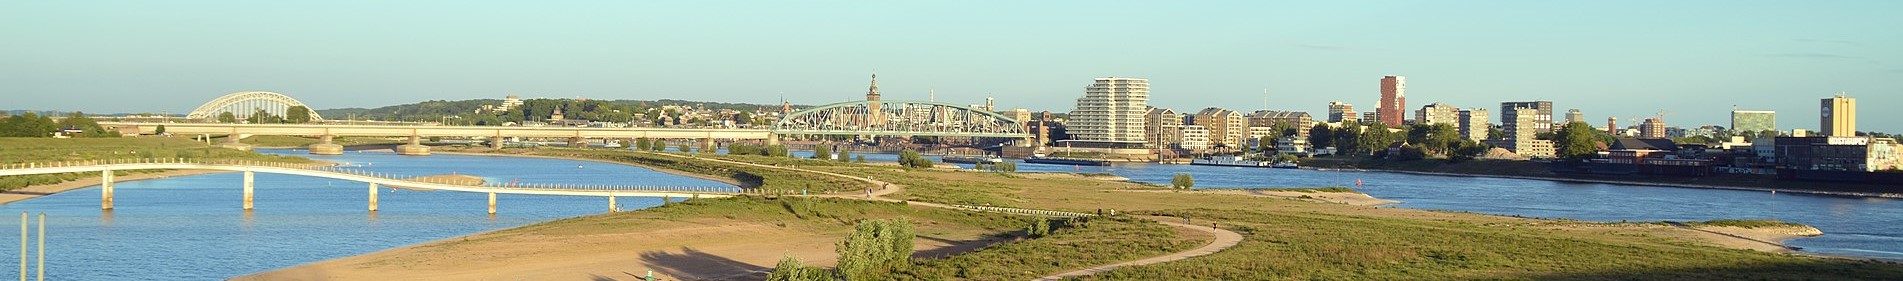 Nijmegen 